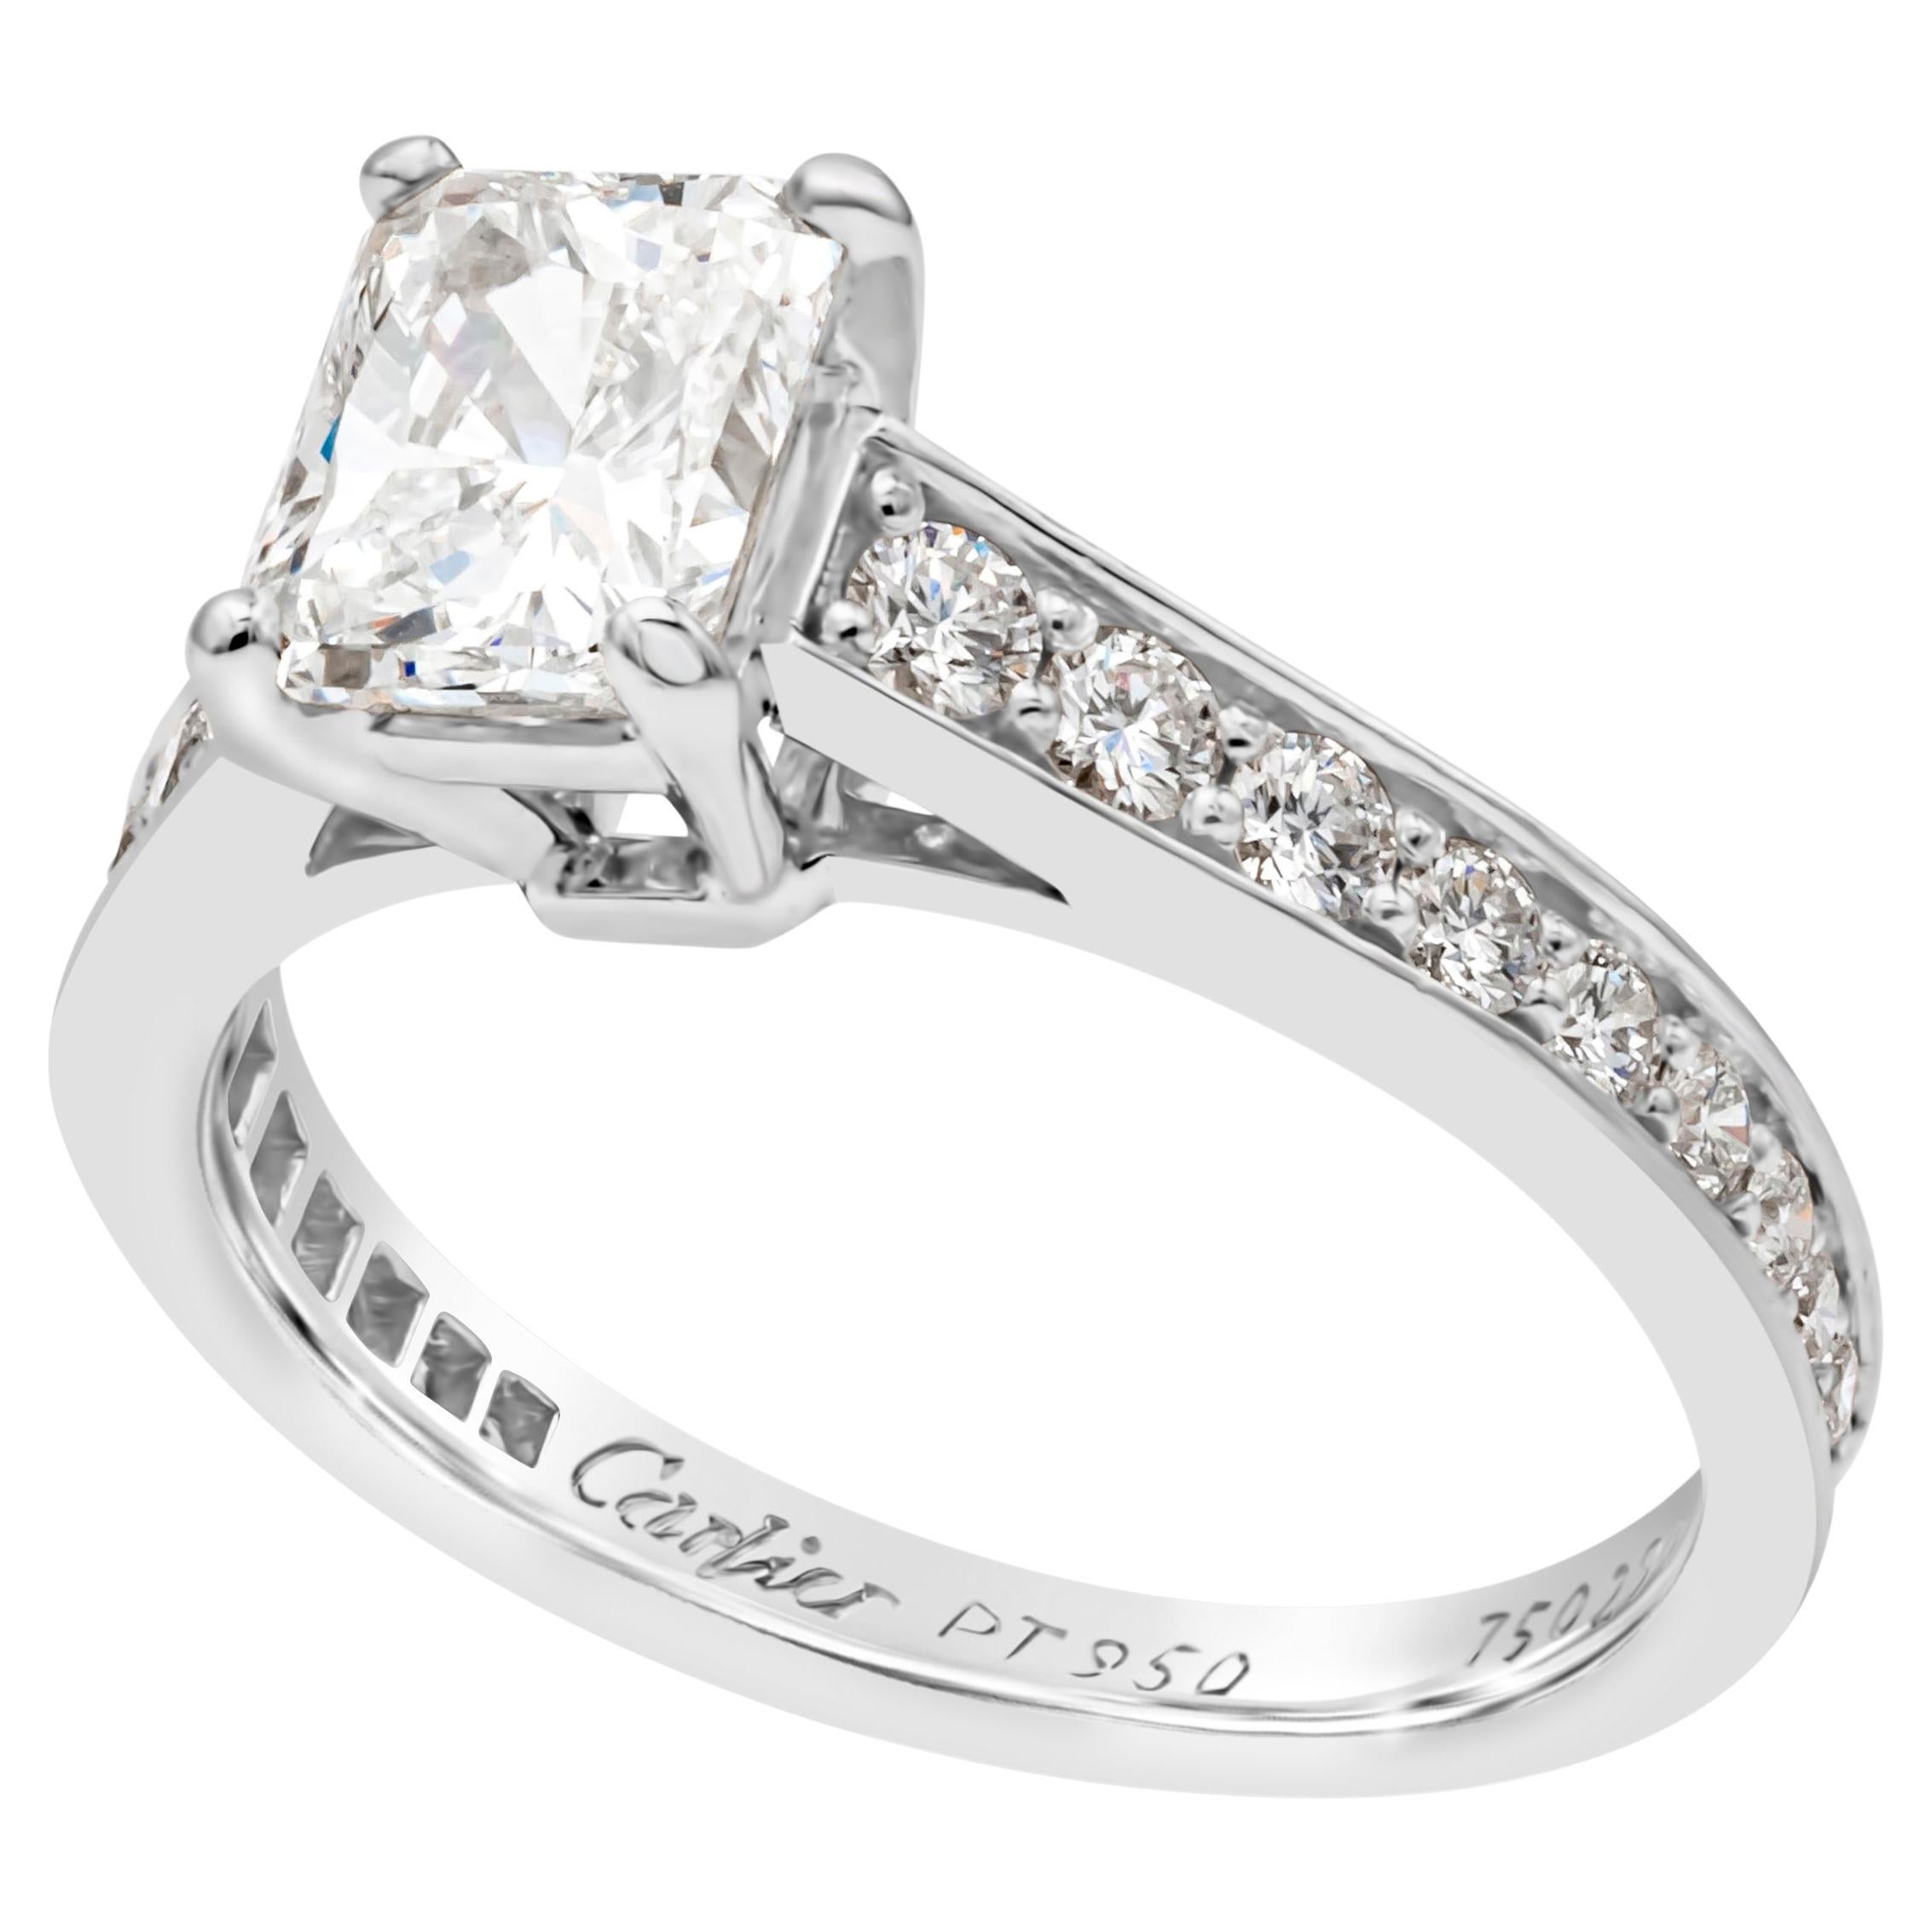 Cartier 1895 1.03 Carats Radiant Cut Diamond Solitaire Engagement Ring